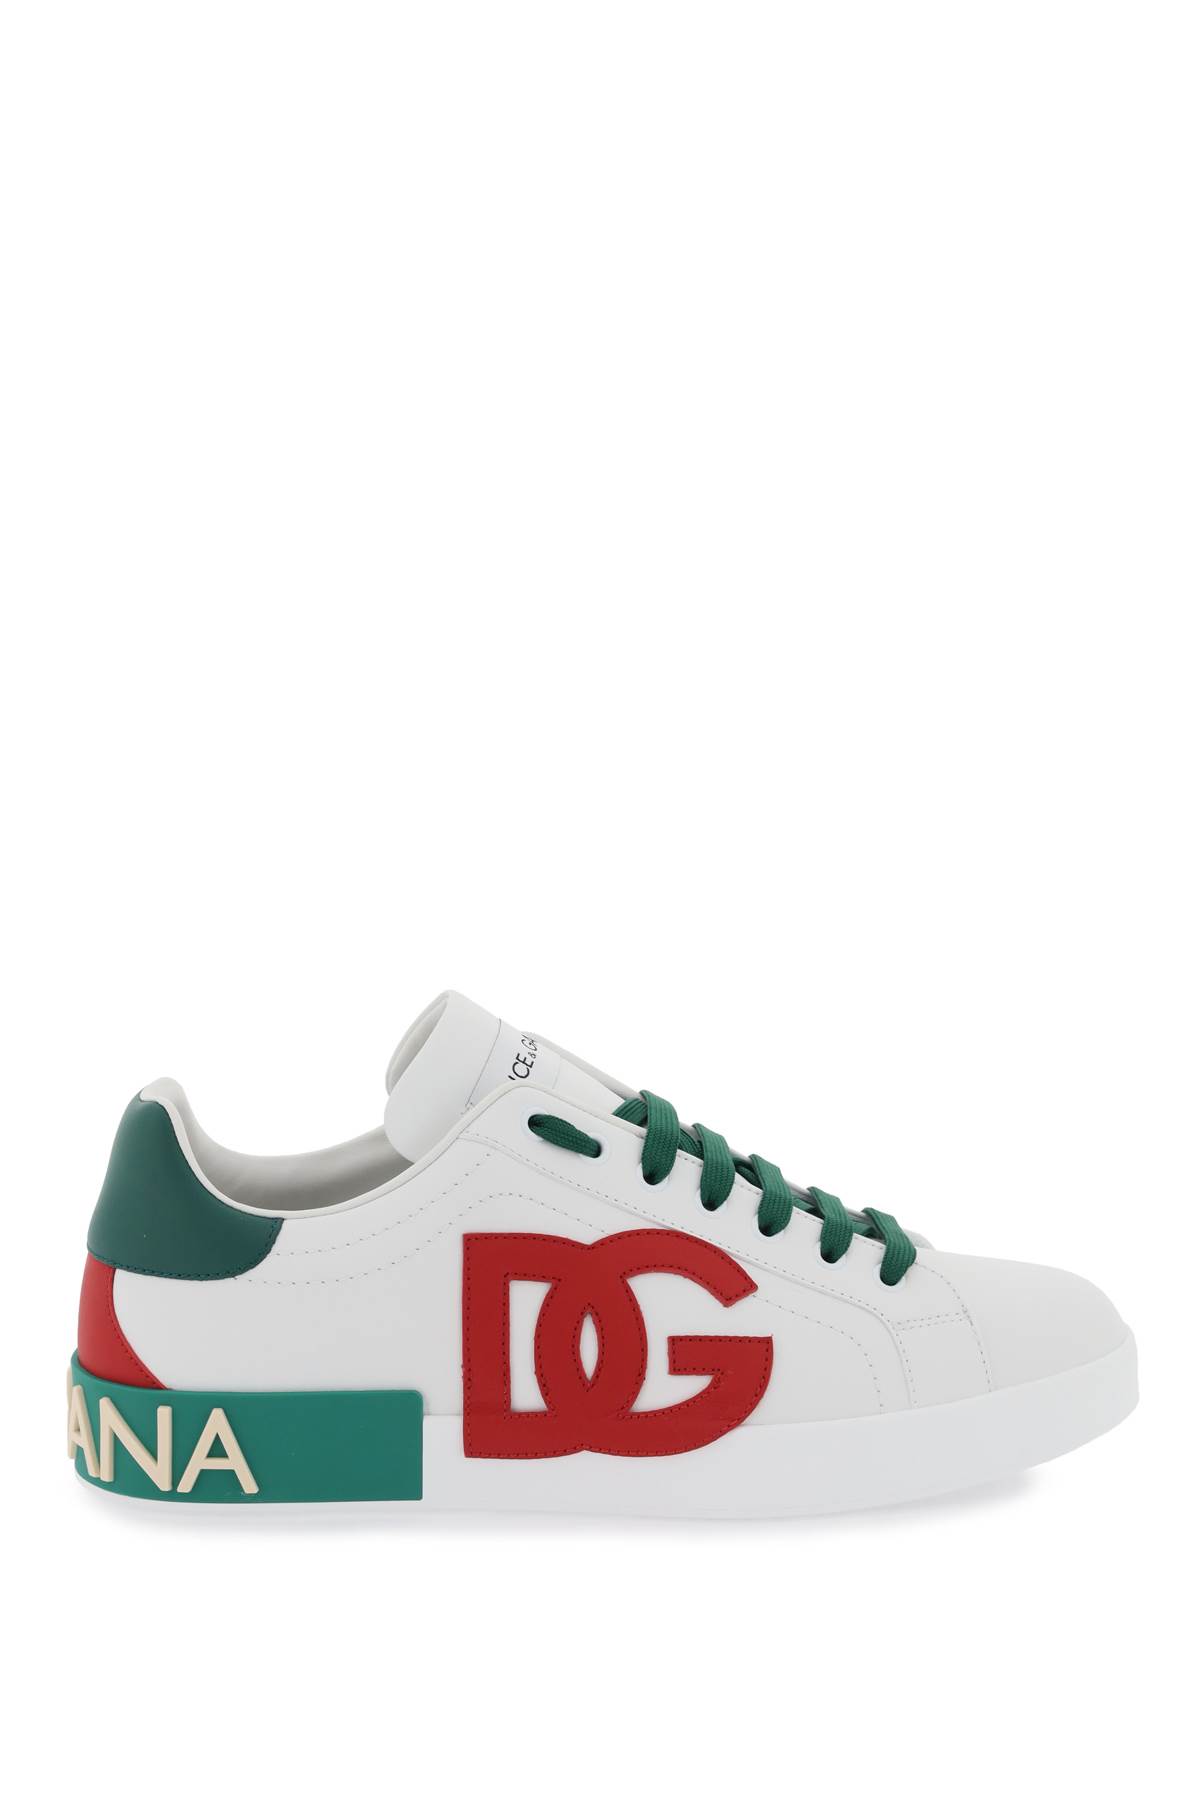 Dolce & Gabbana Portofino Sneakers In Green